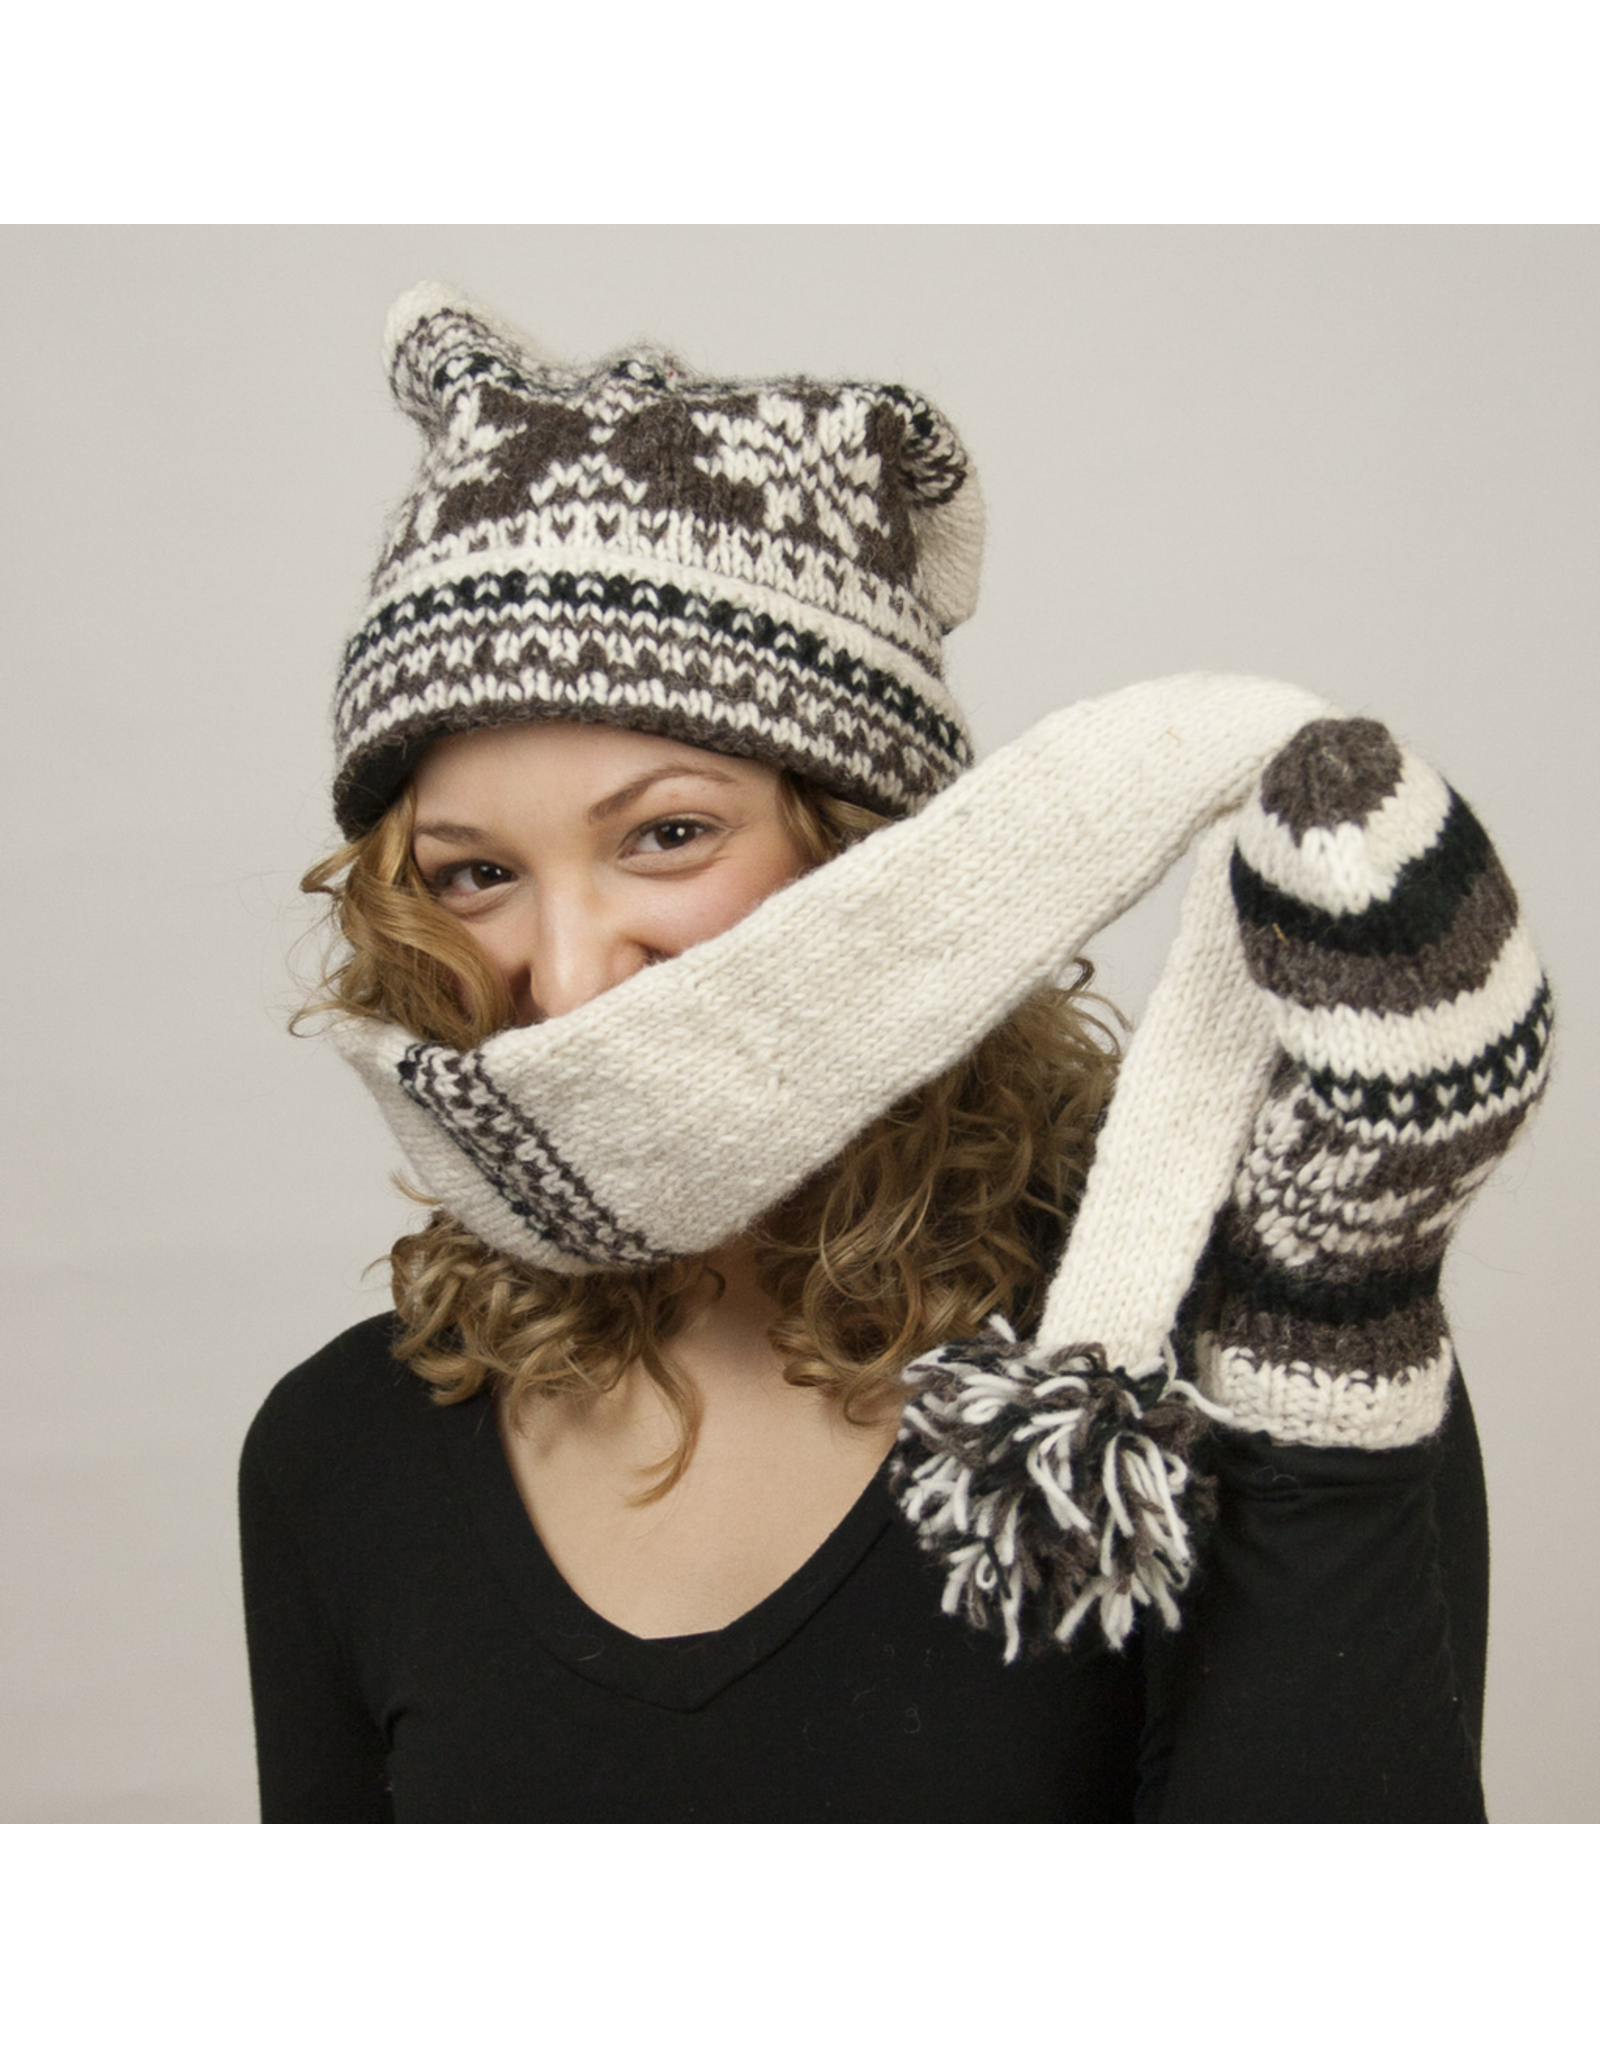 The Sweater Venture Snowfox Fleece Lined Stocking Cap